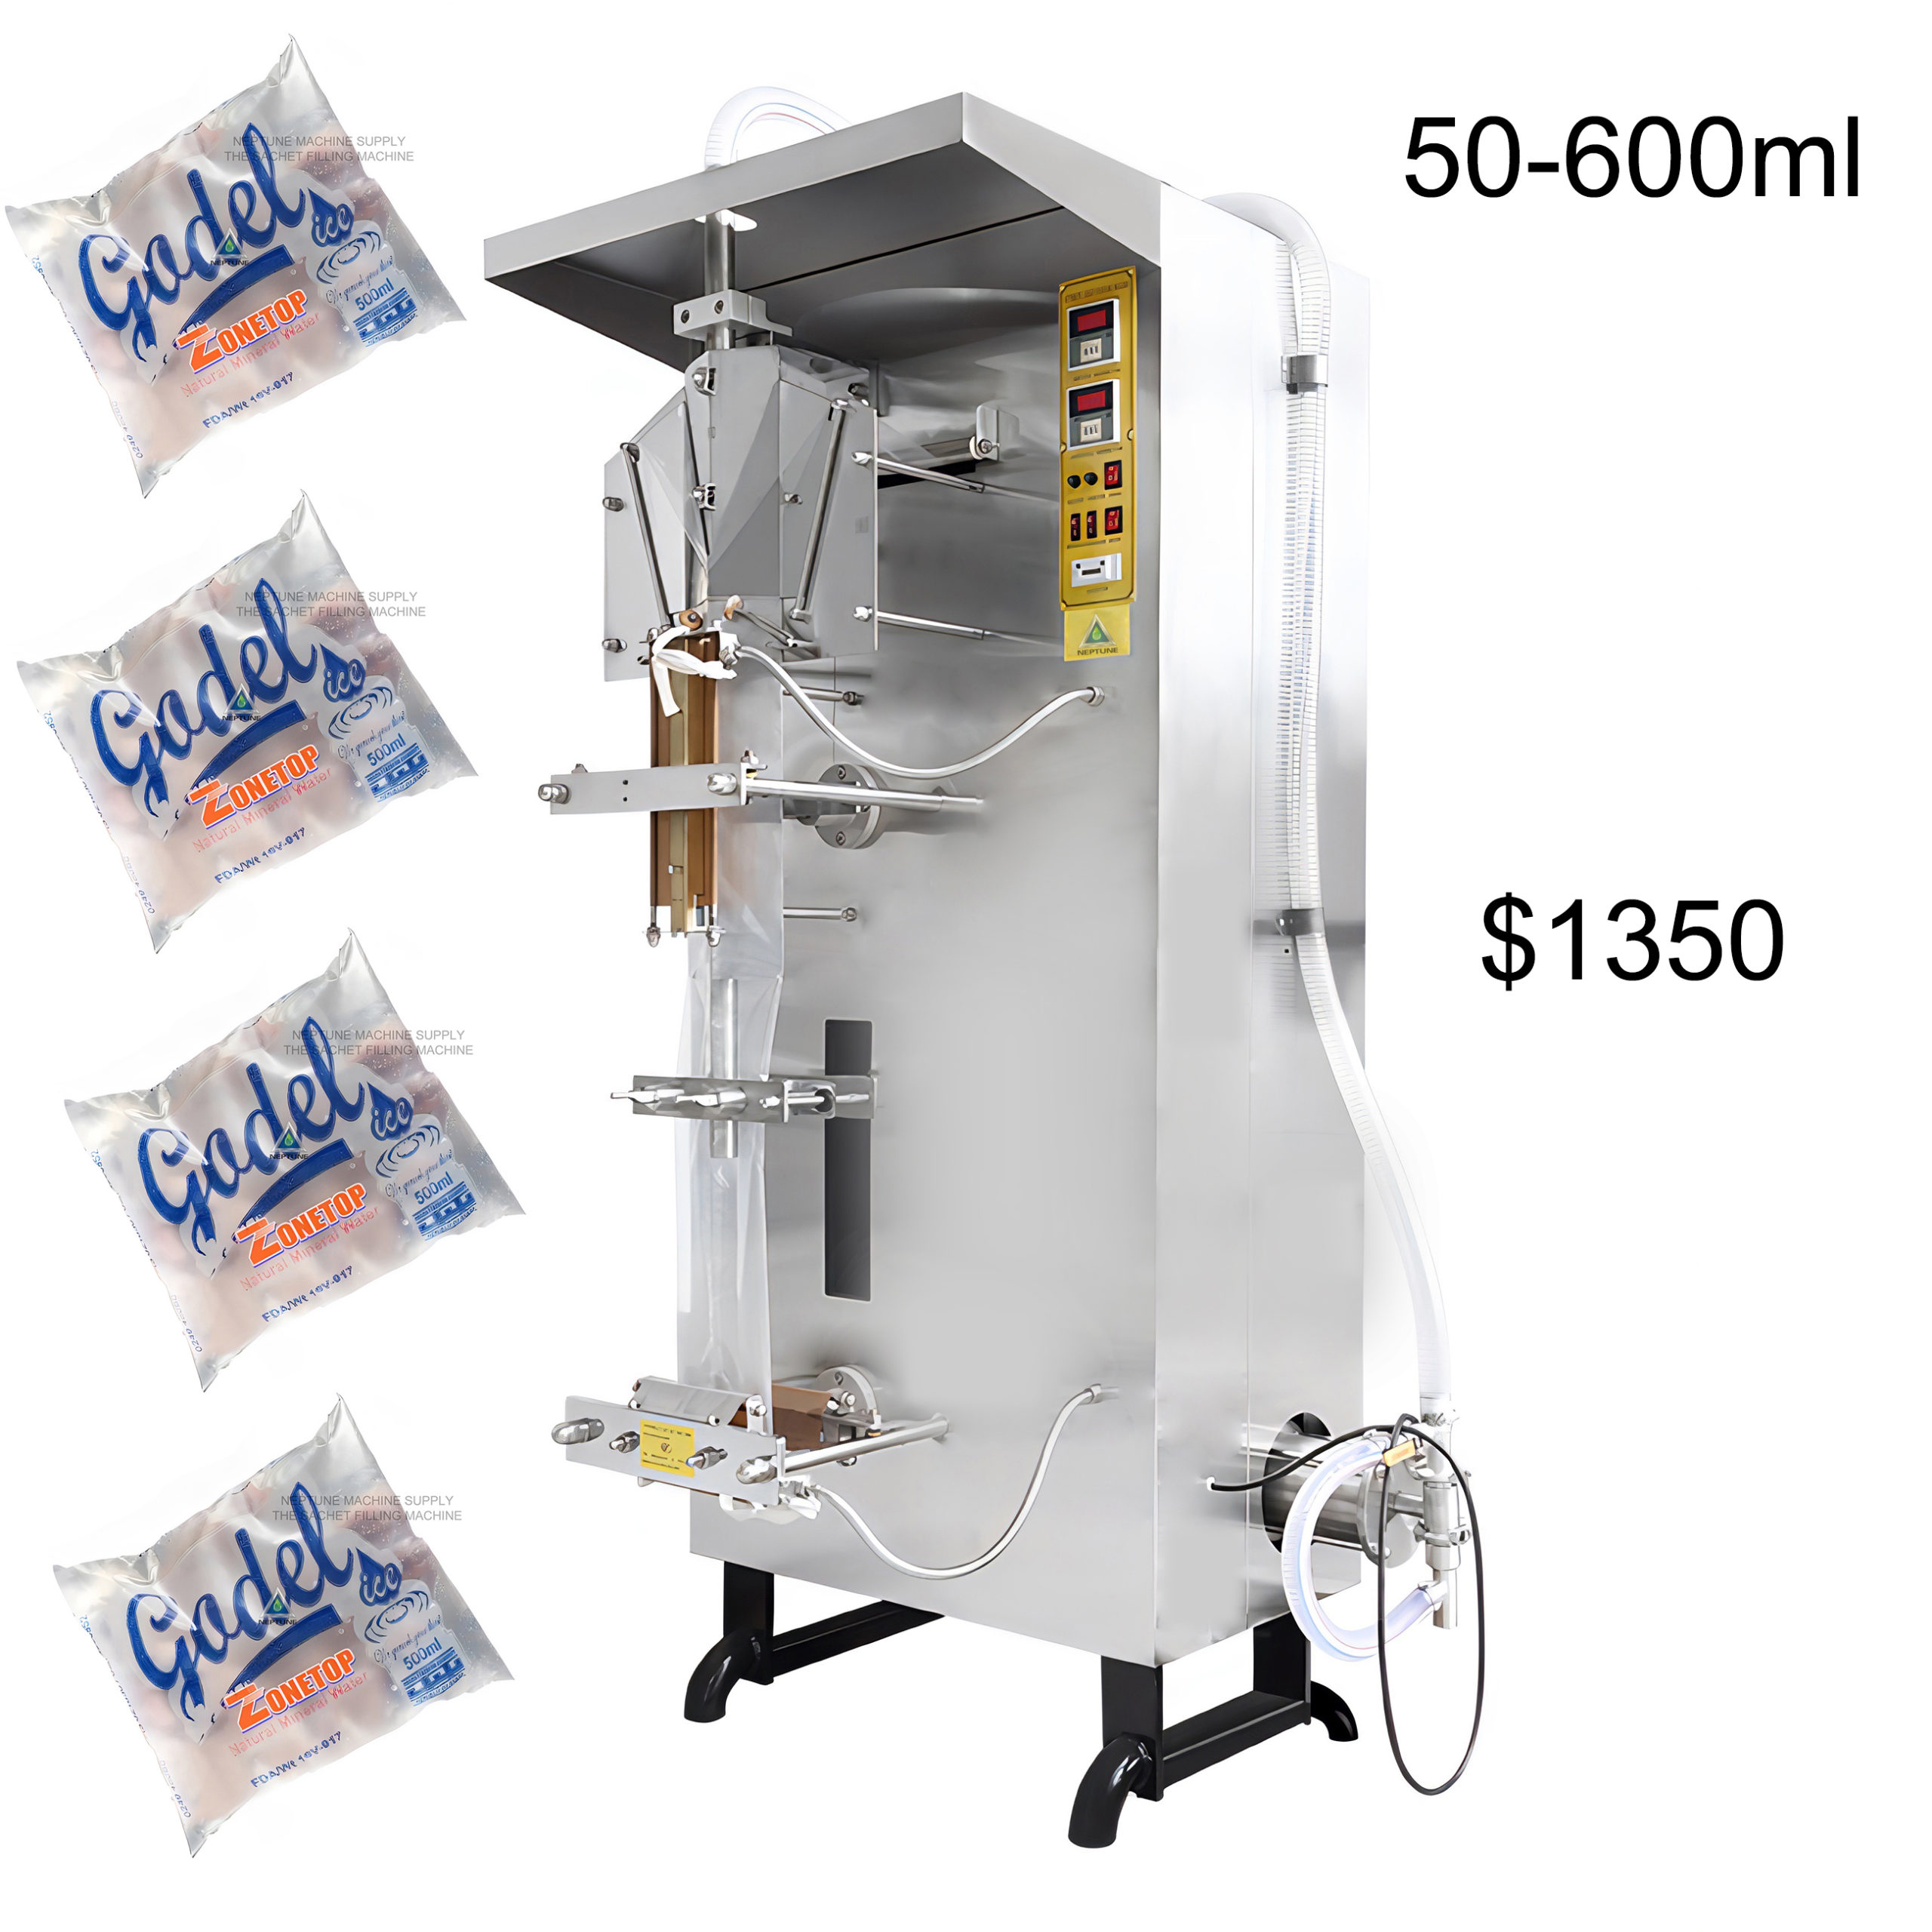 SL 1000 Sachet water packaging machine for 50ml to 600ml sachet water fob price at 1350